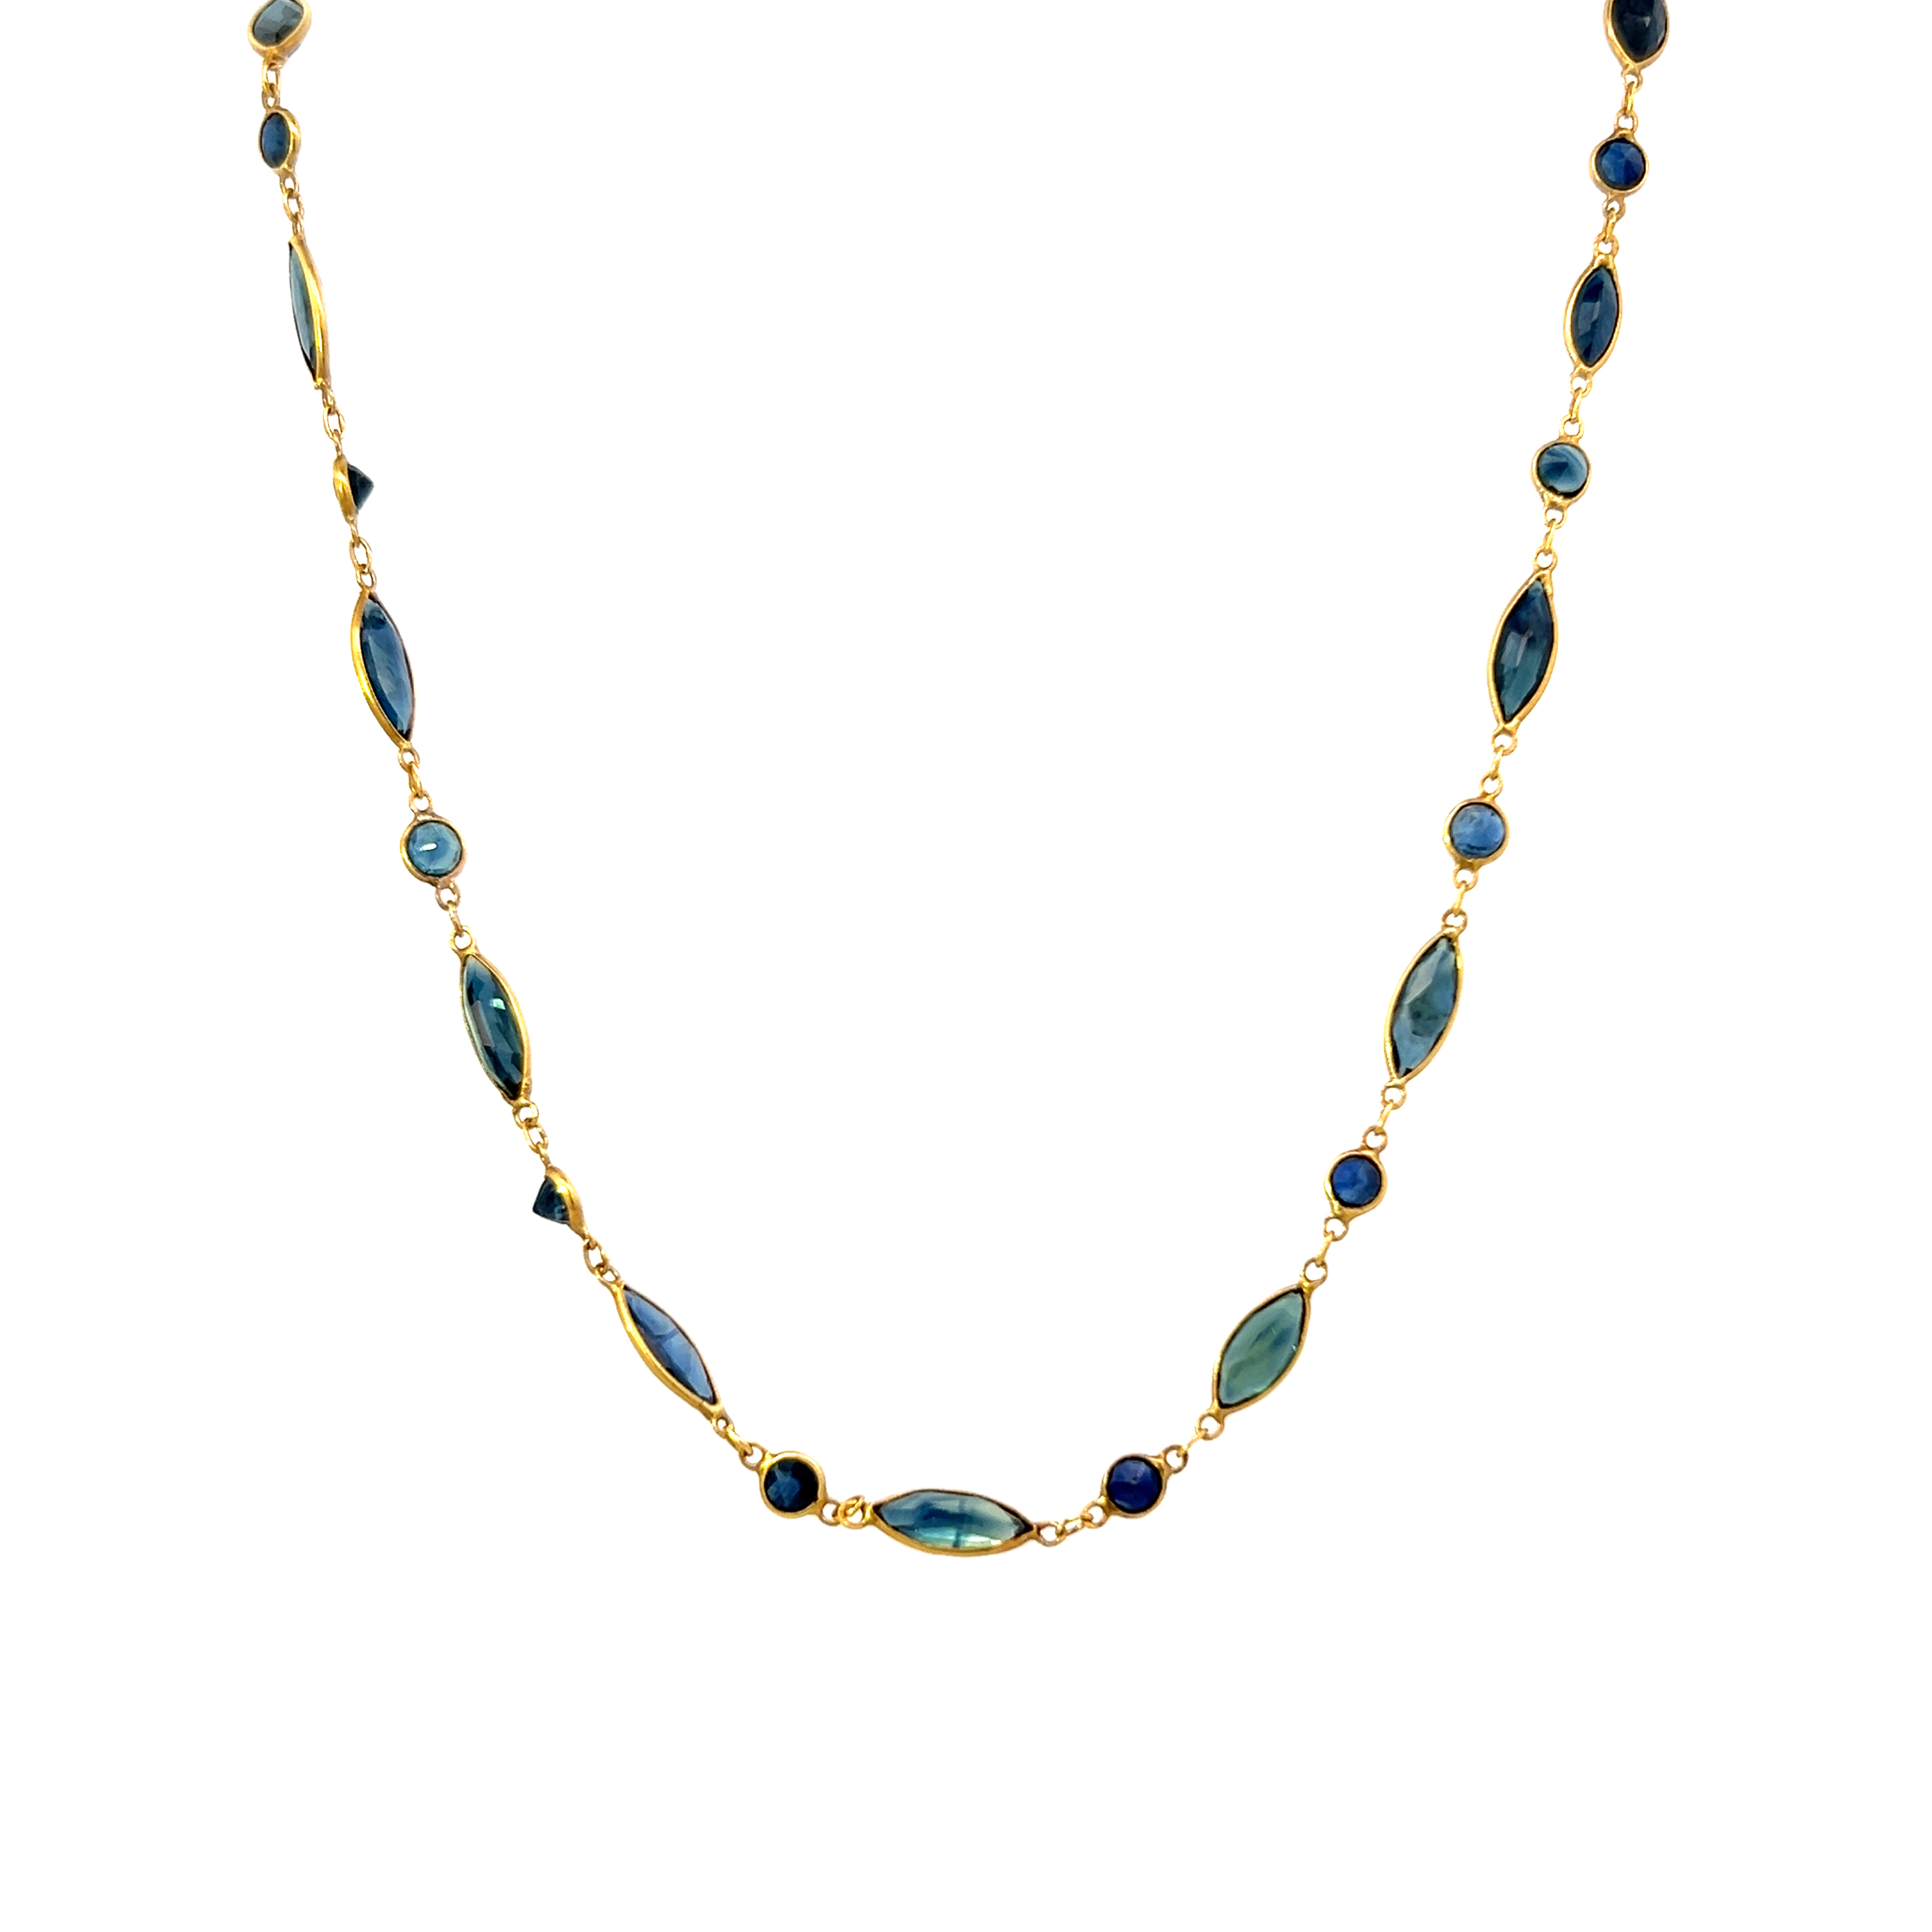 Stunning Sapphire Necklace